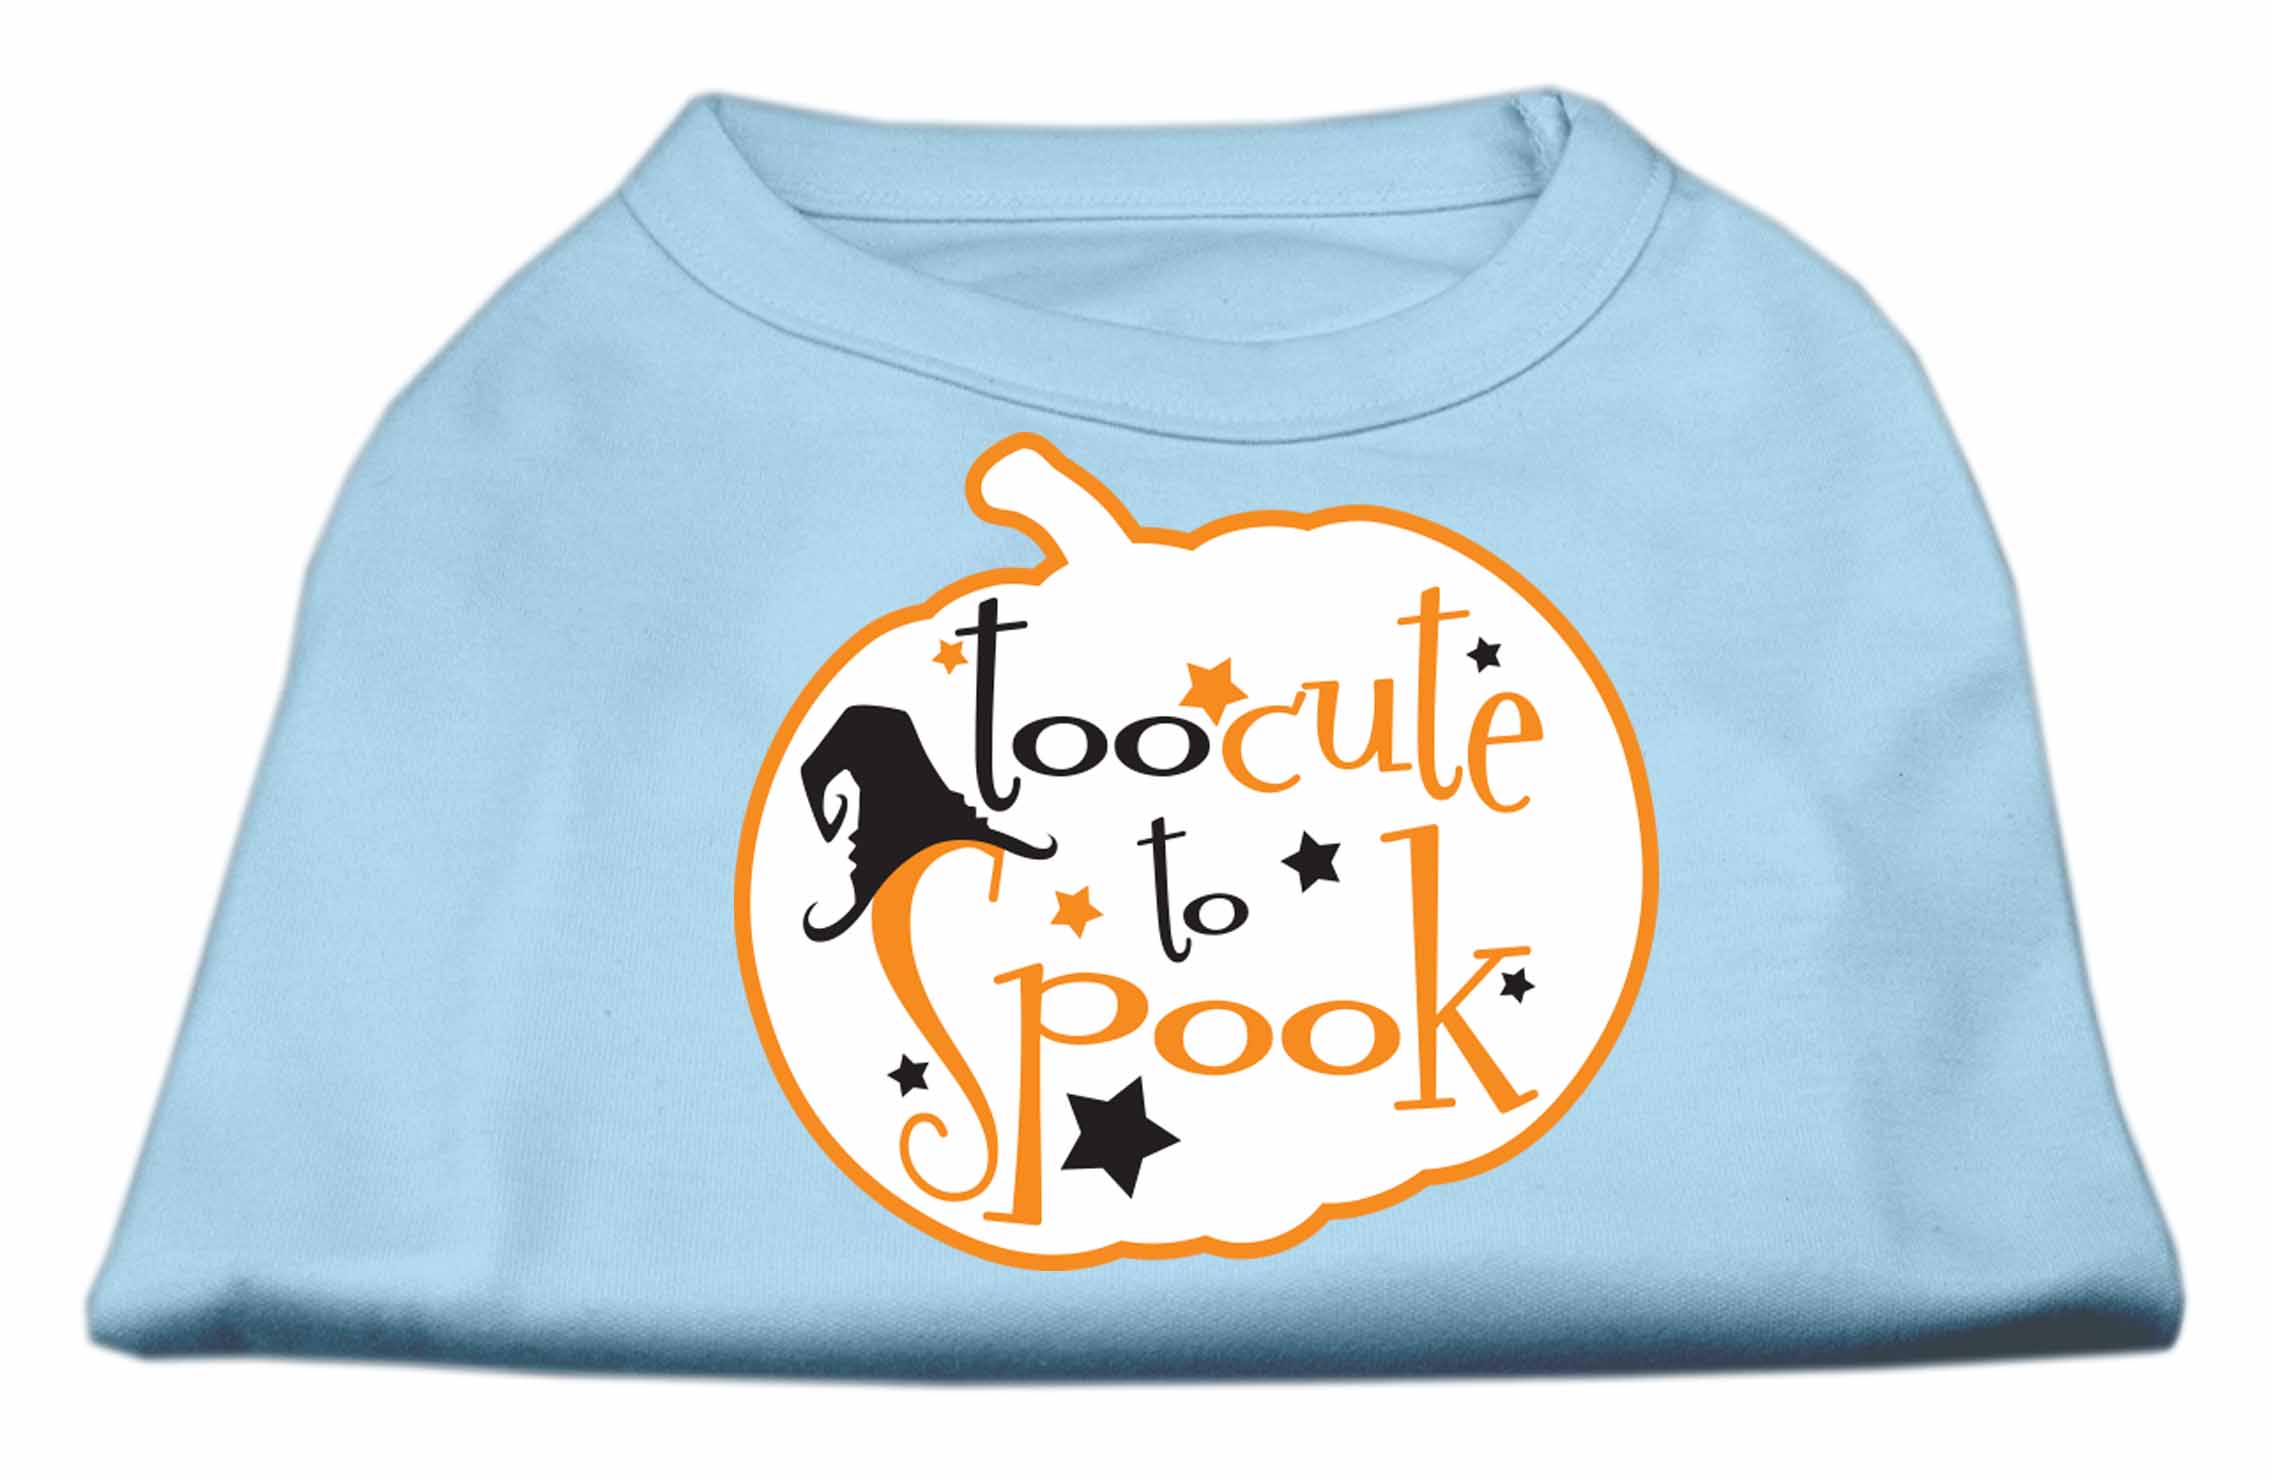 Too Cute to Spook Screen Print Dog Shirt Baby Blue Sm